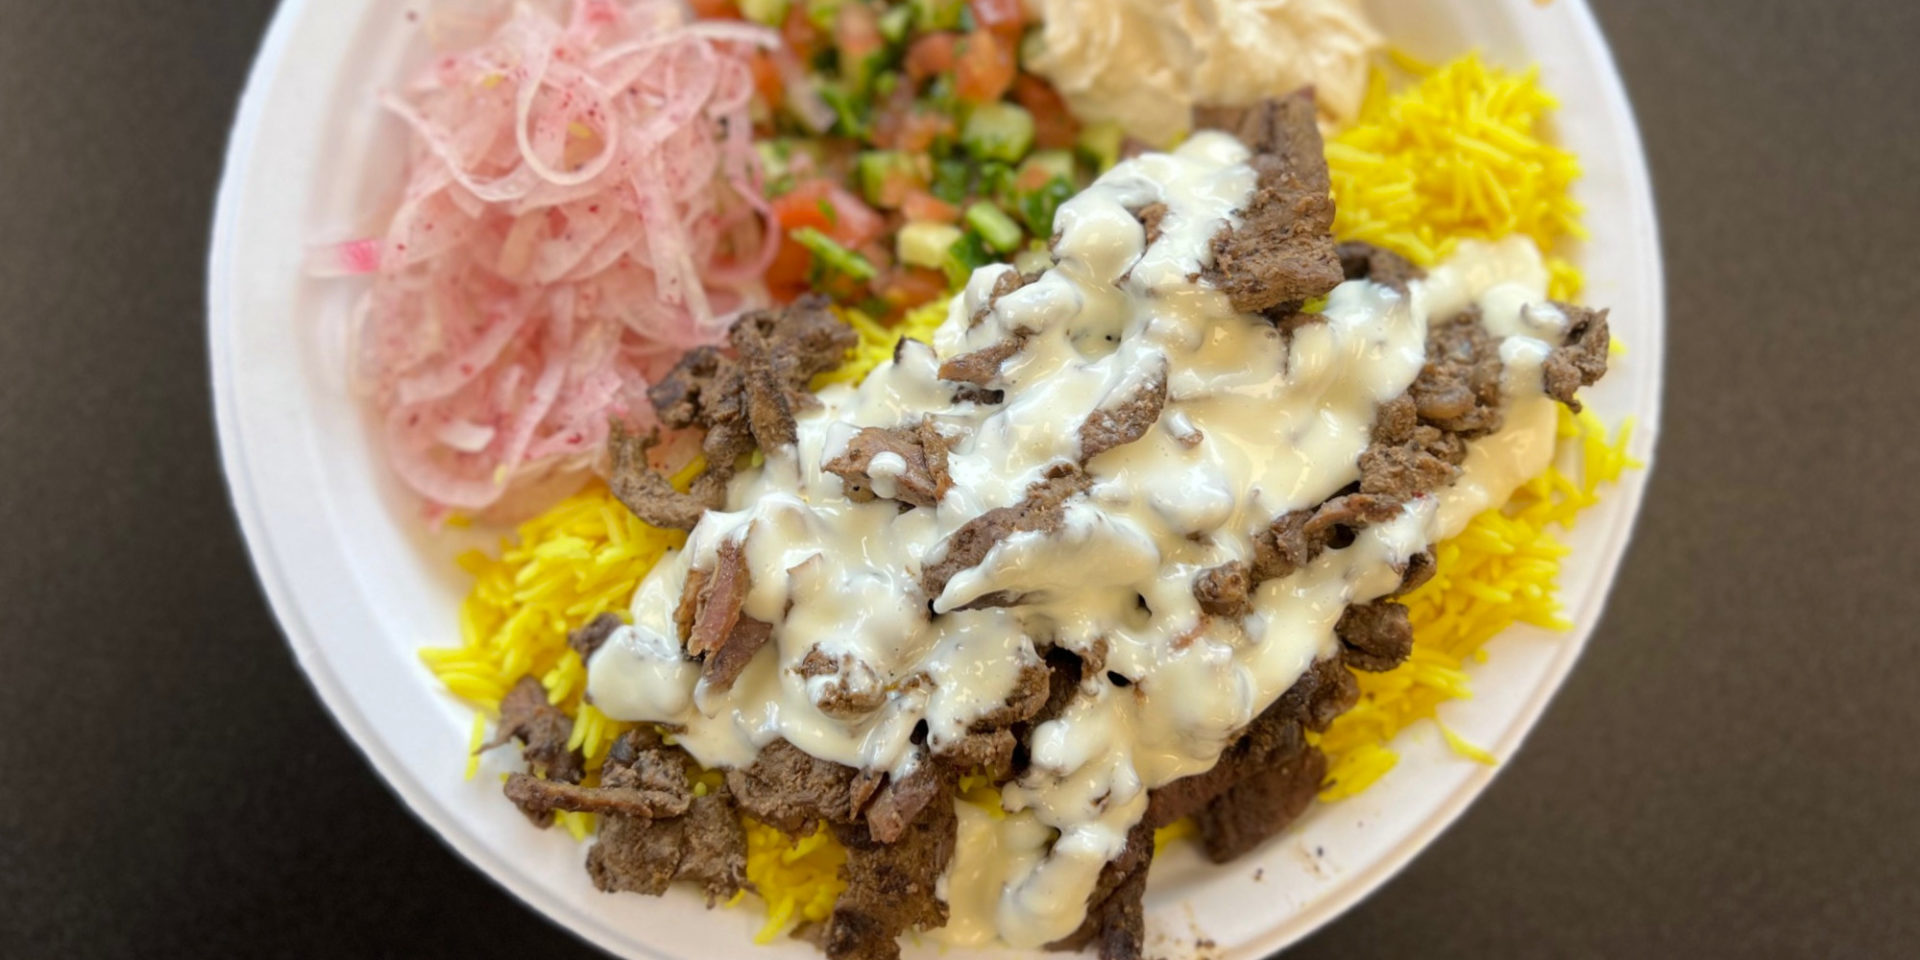 Beef shawarma plate at Dubai Grill.